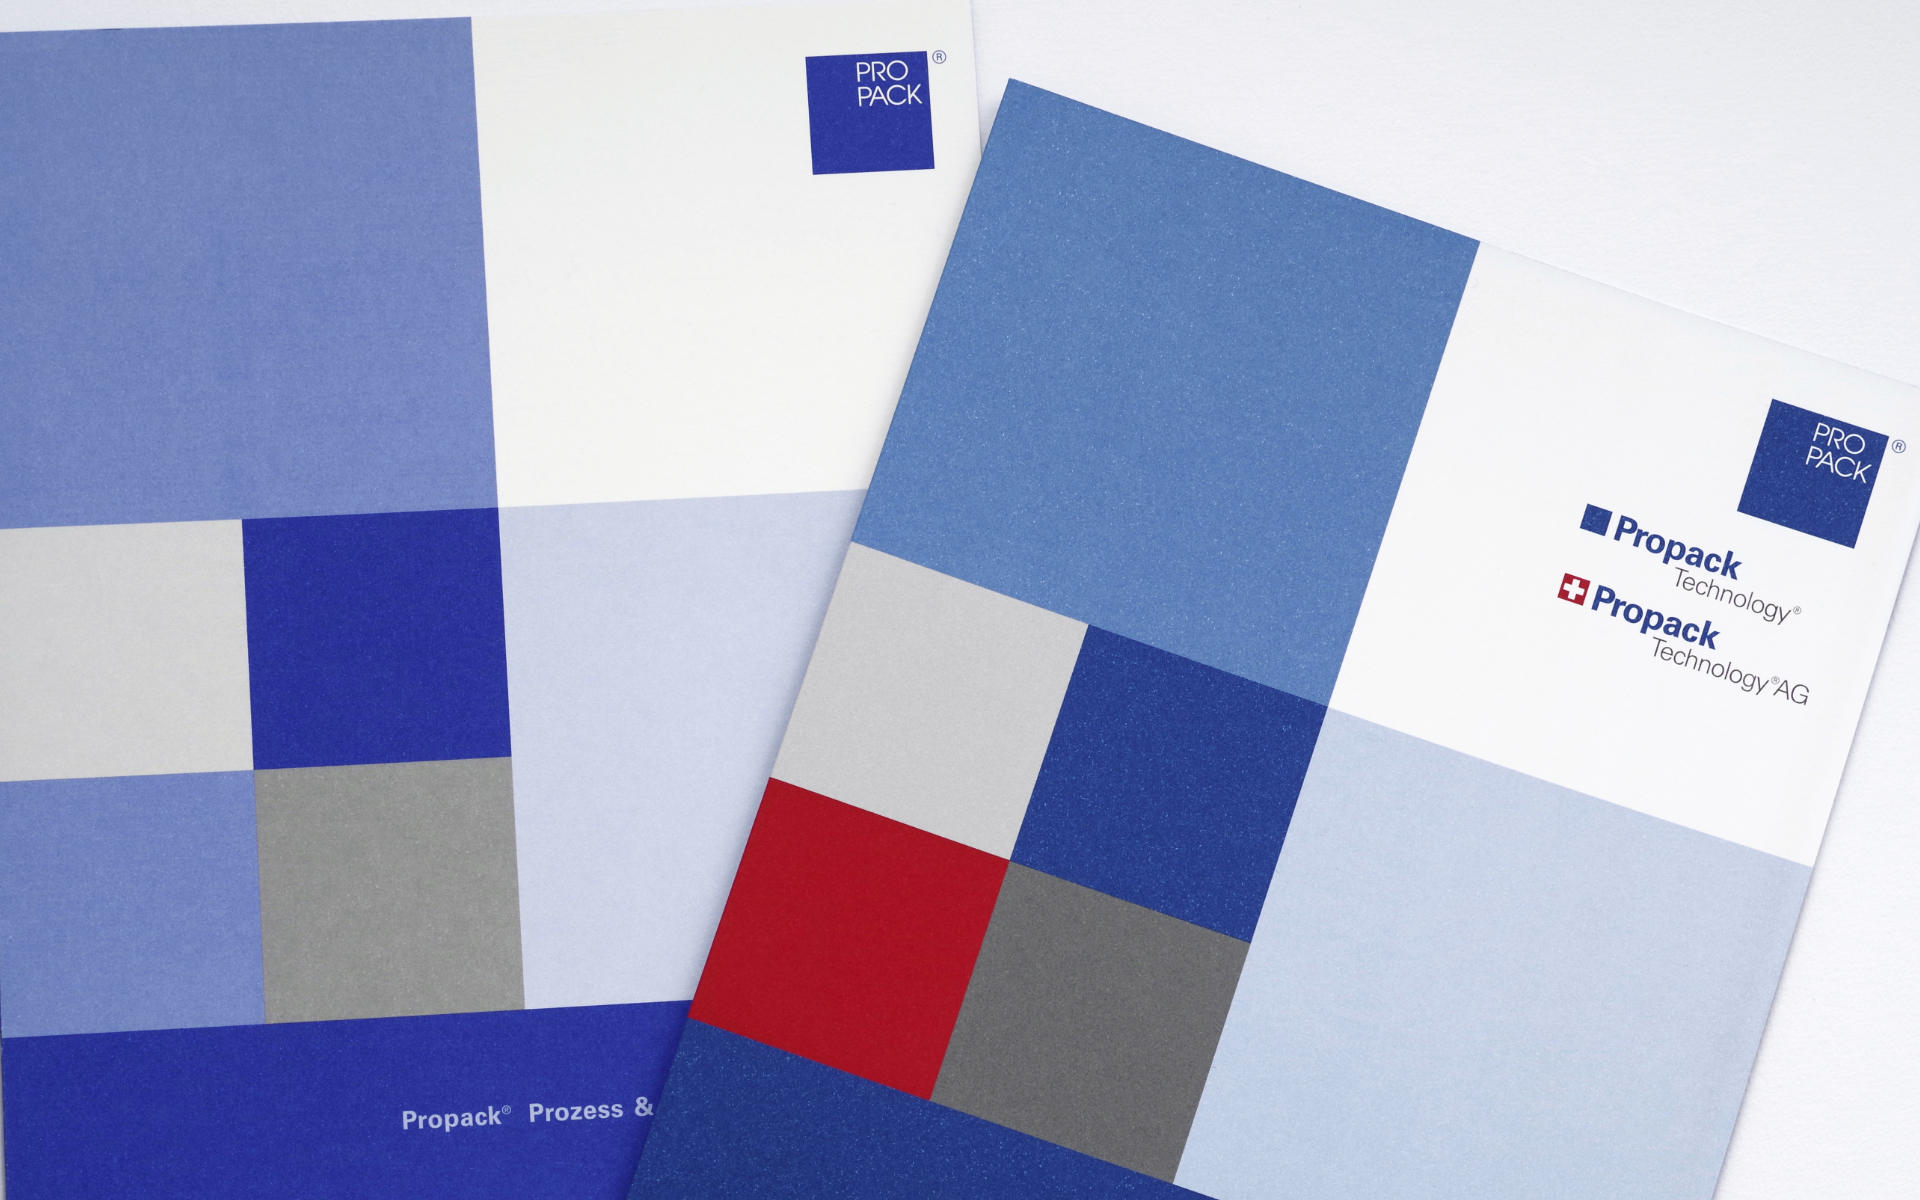 Propack Image Brochuere Corporate Design